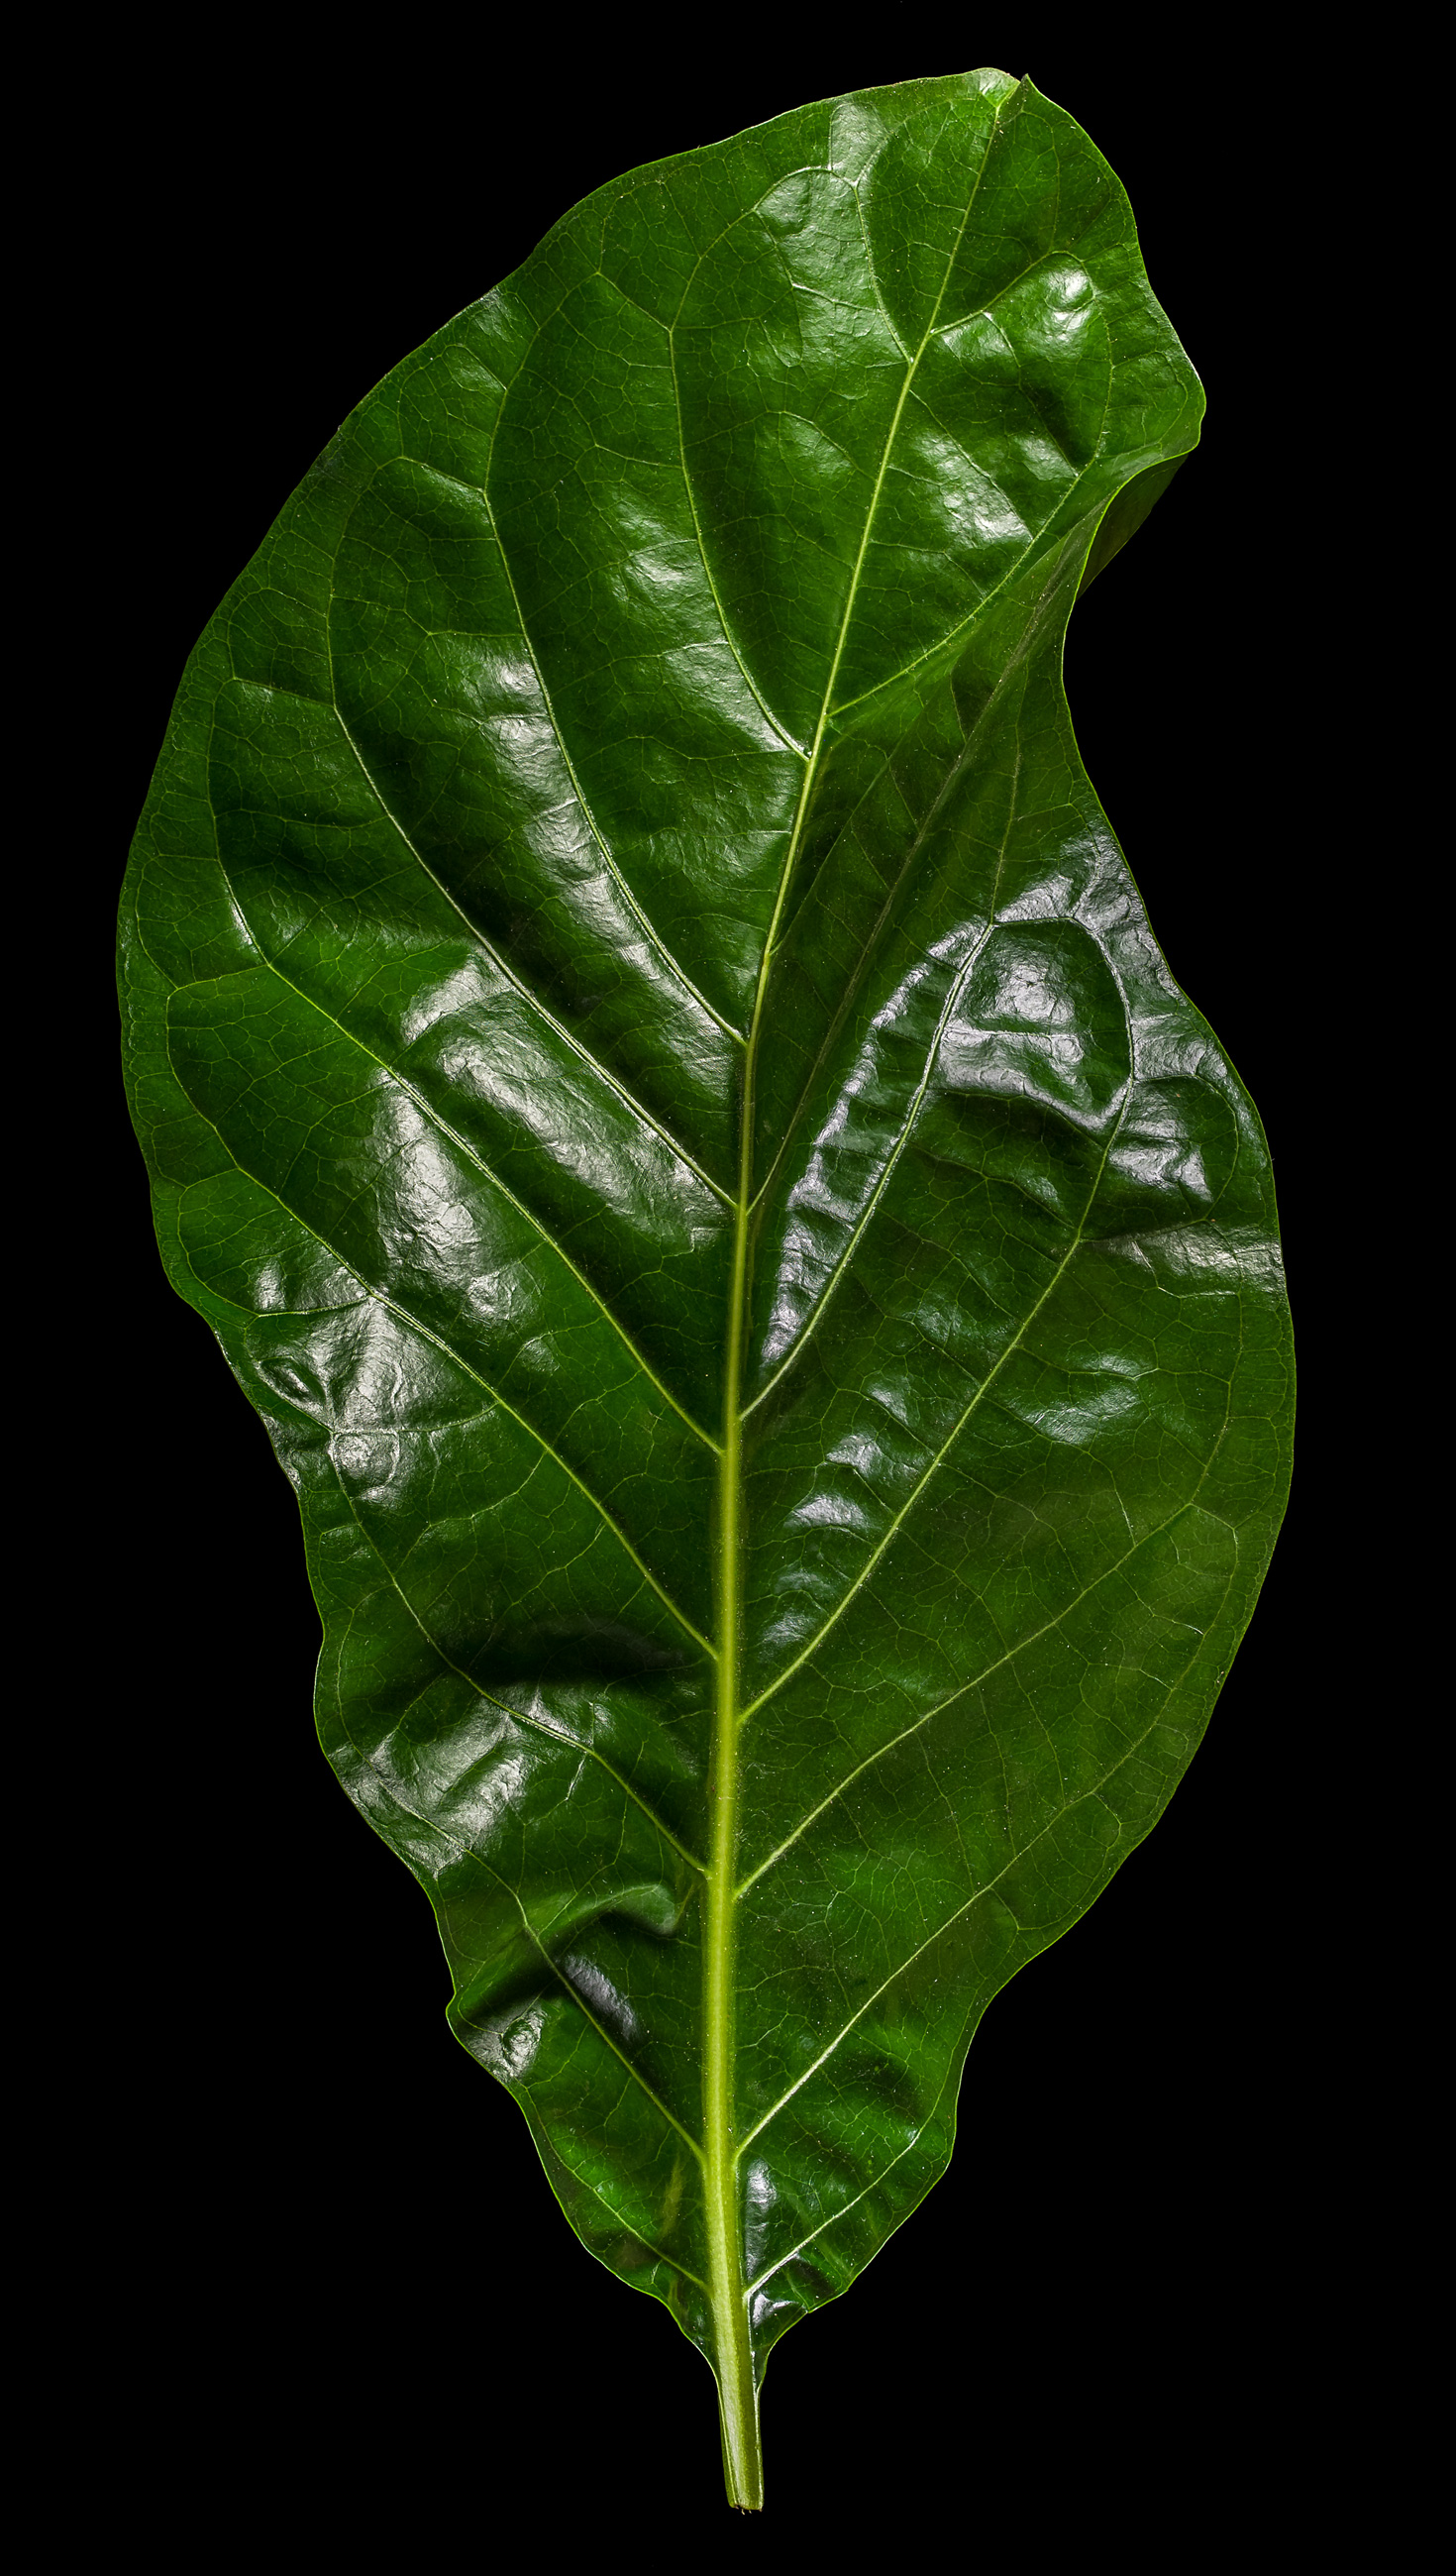 Noni Leaf (Bai-yo): Morinda citrifolia